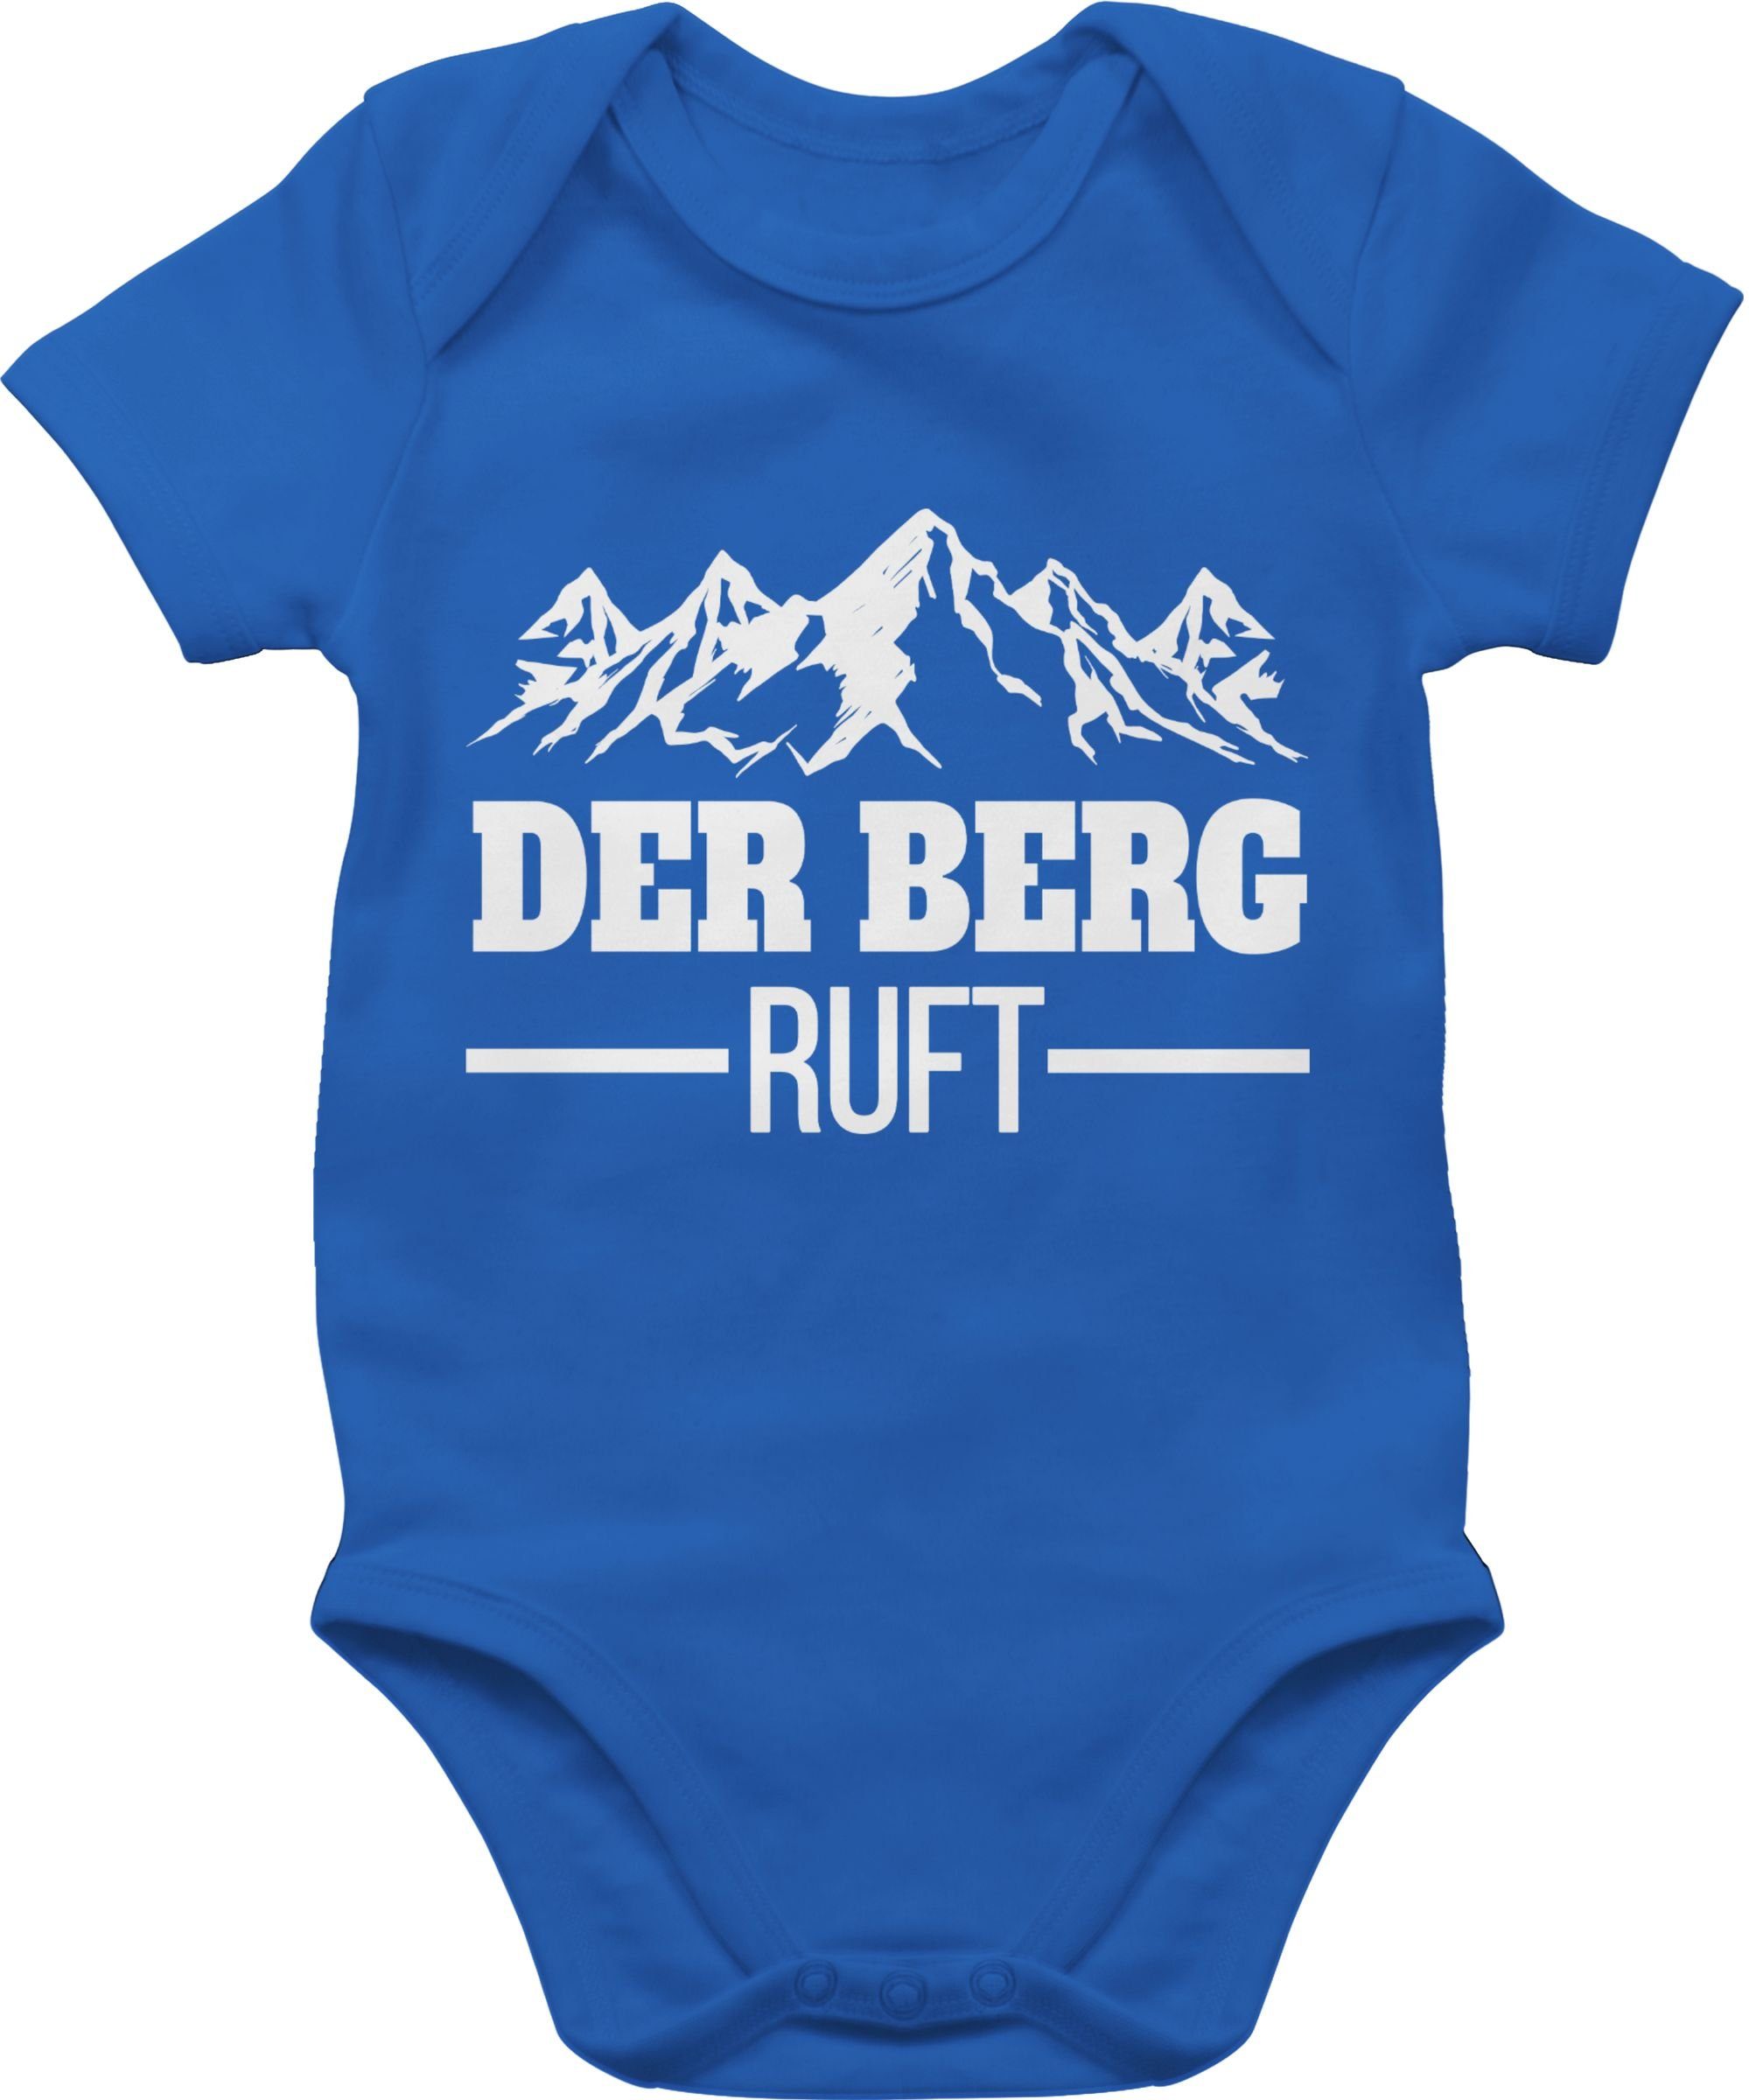 Shirtracer Shirtbody Der Berg ruft Sport & Bewegung Baby 3 Royalblau